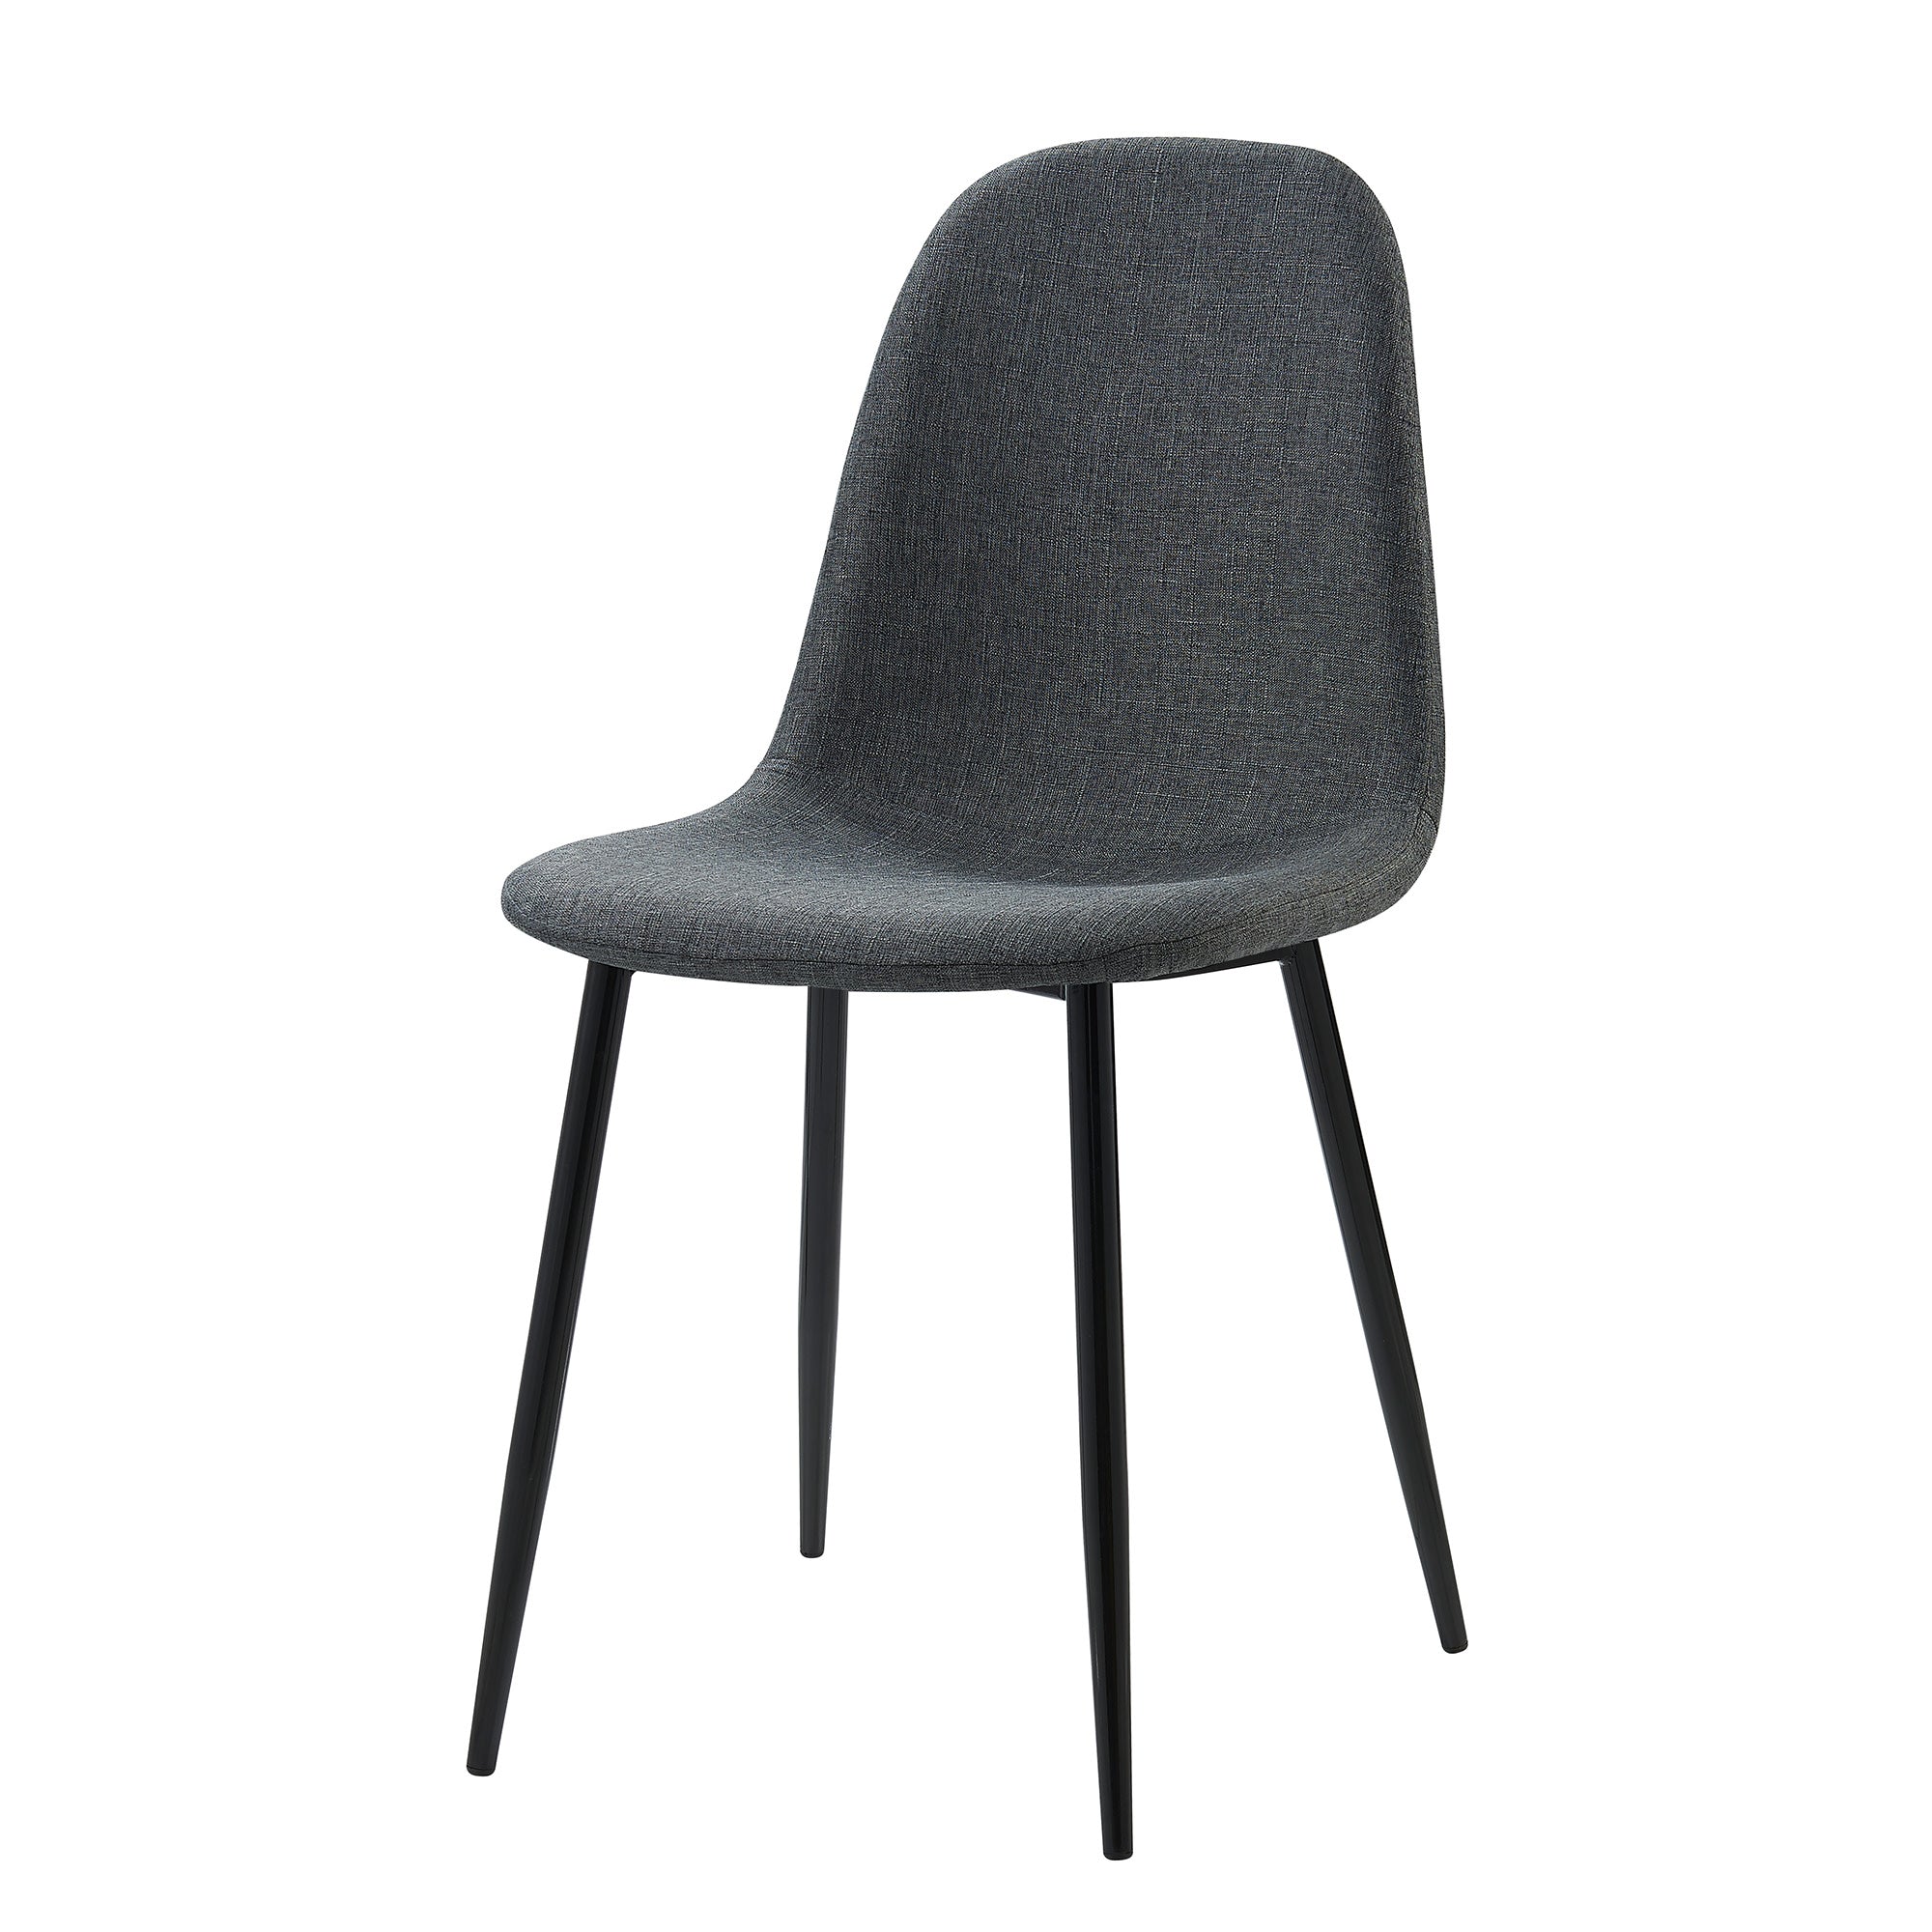 Teamson Home Minimalista Fabric Dining Chair with Black Metal Legs, Set of 2, Black/Gray